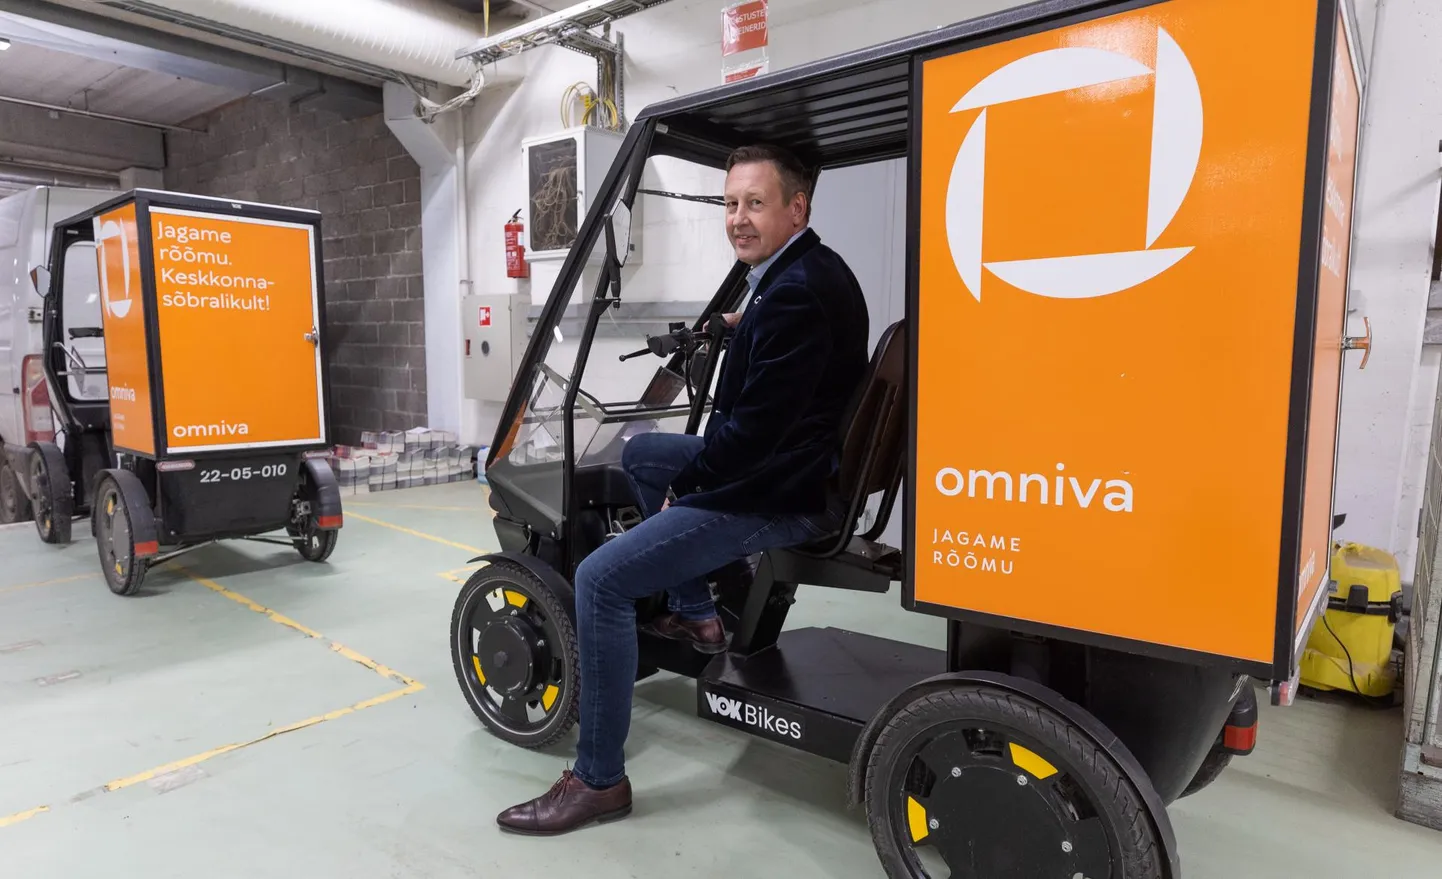 Глава Eesti Post Март Мяги за «рулем» электрического грузового велосипеда.